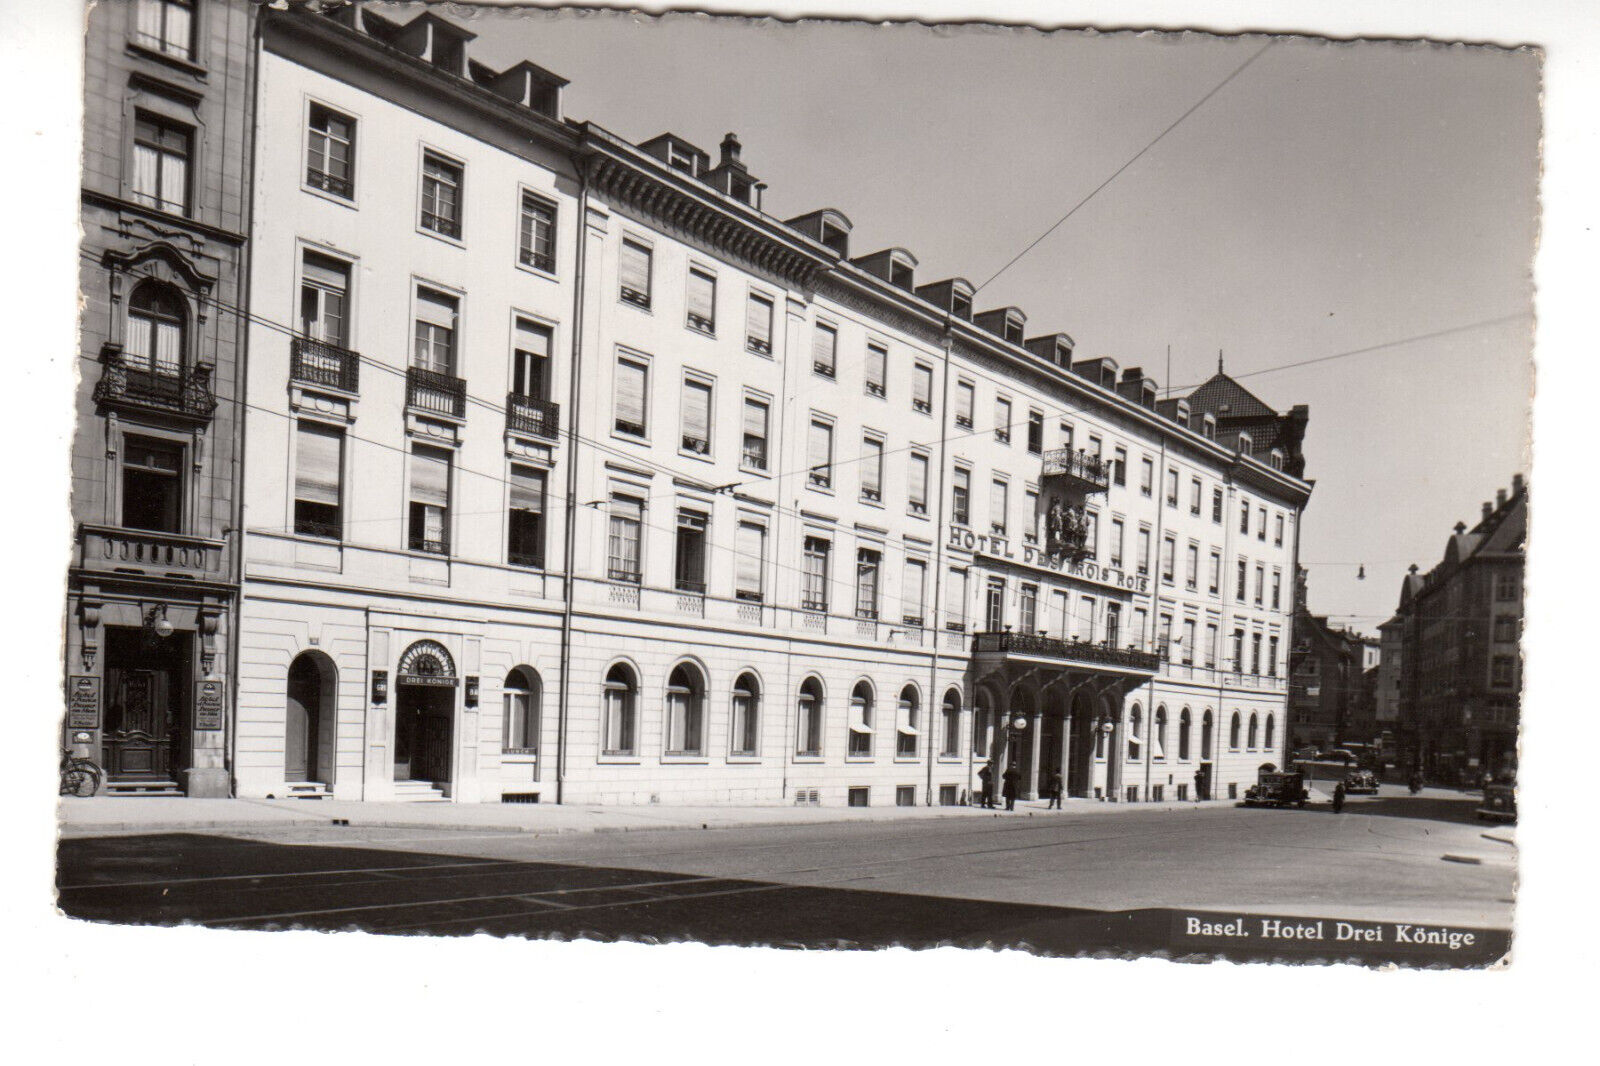 RPPC Postcard: Basel, Hotel of Three Kings, Switzerland - exterior view